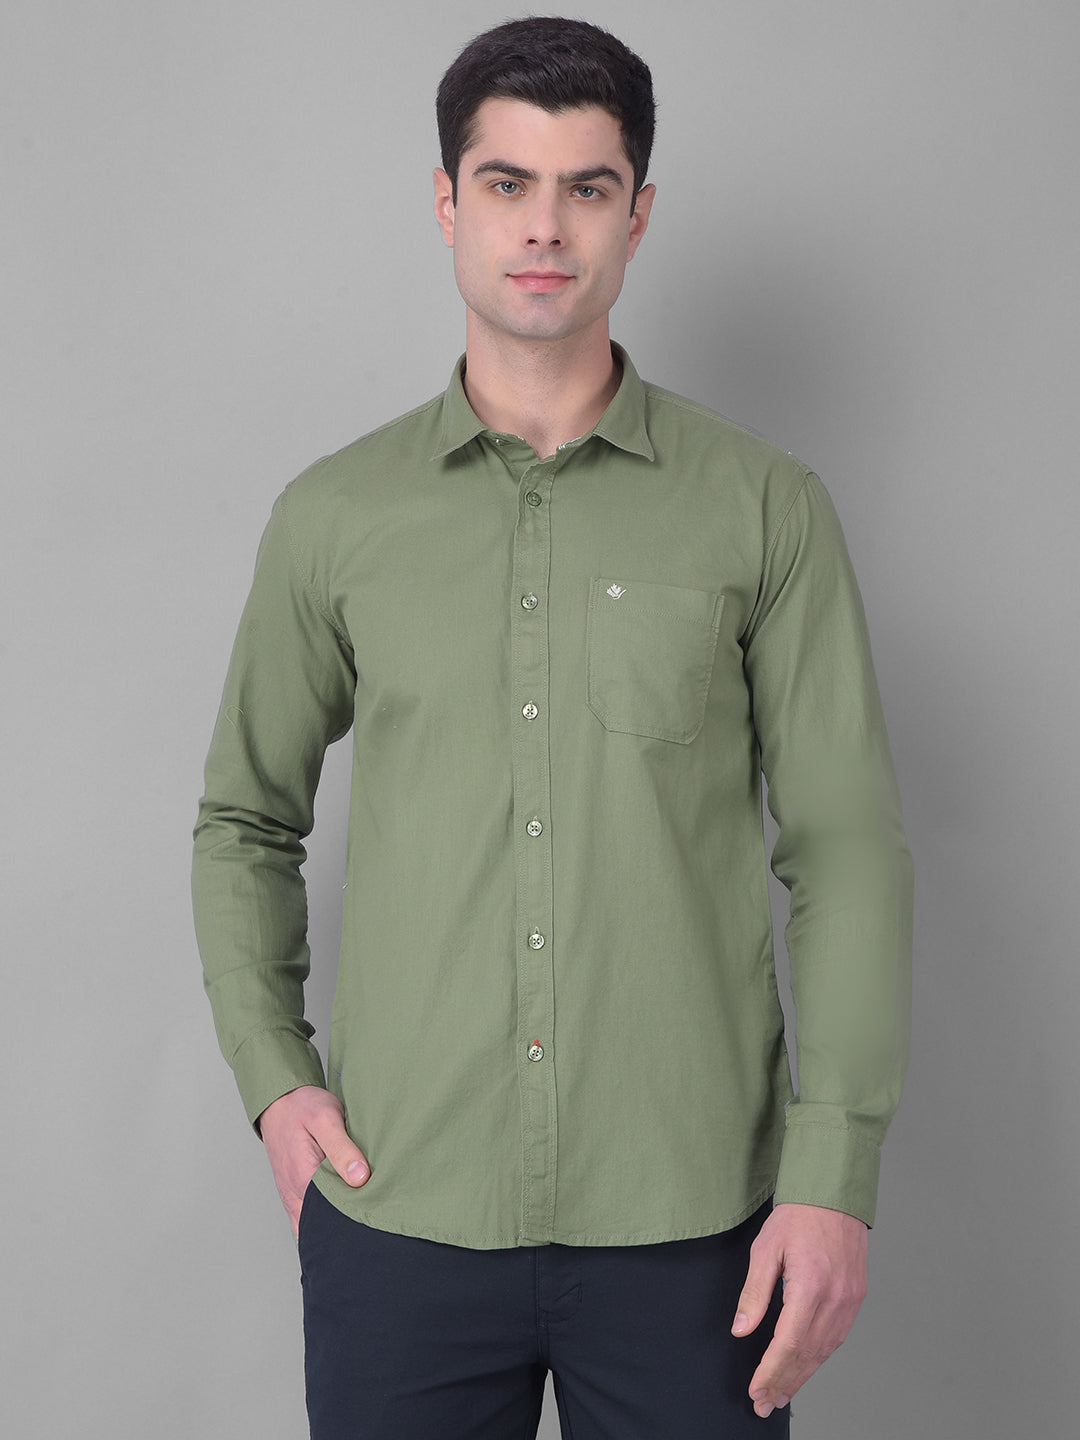 LJ&S Men's Tall Heavy Flannel Shirt in Army Plaid-Black & Surplus Gree –  American Tall